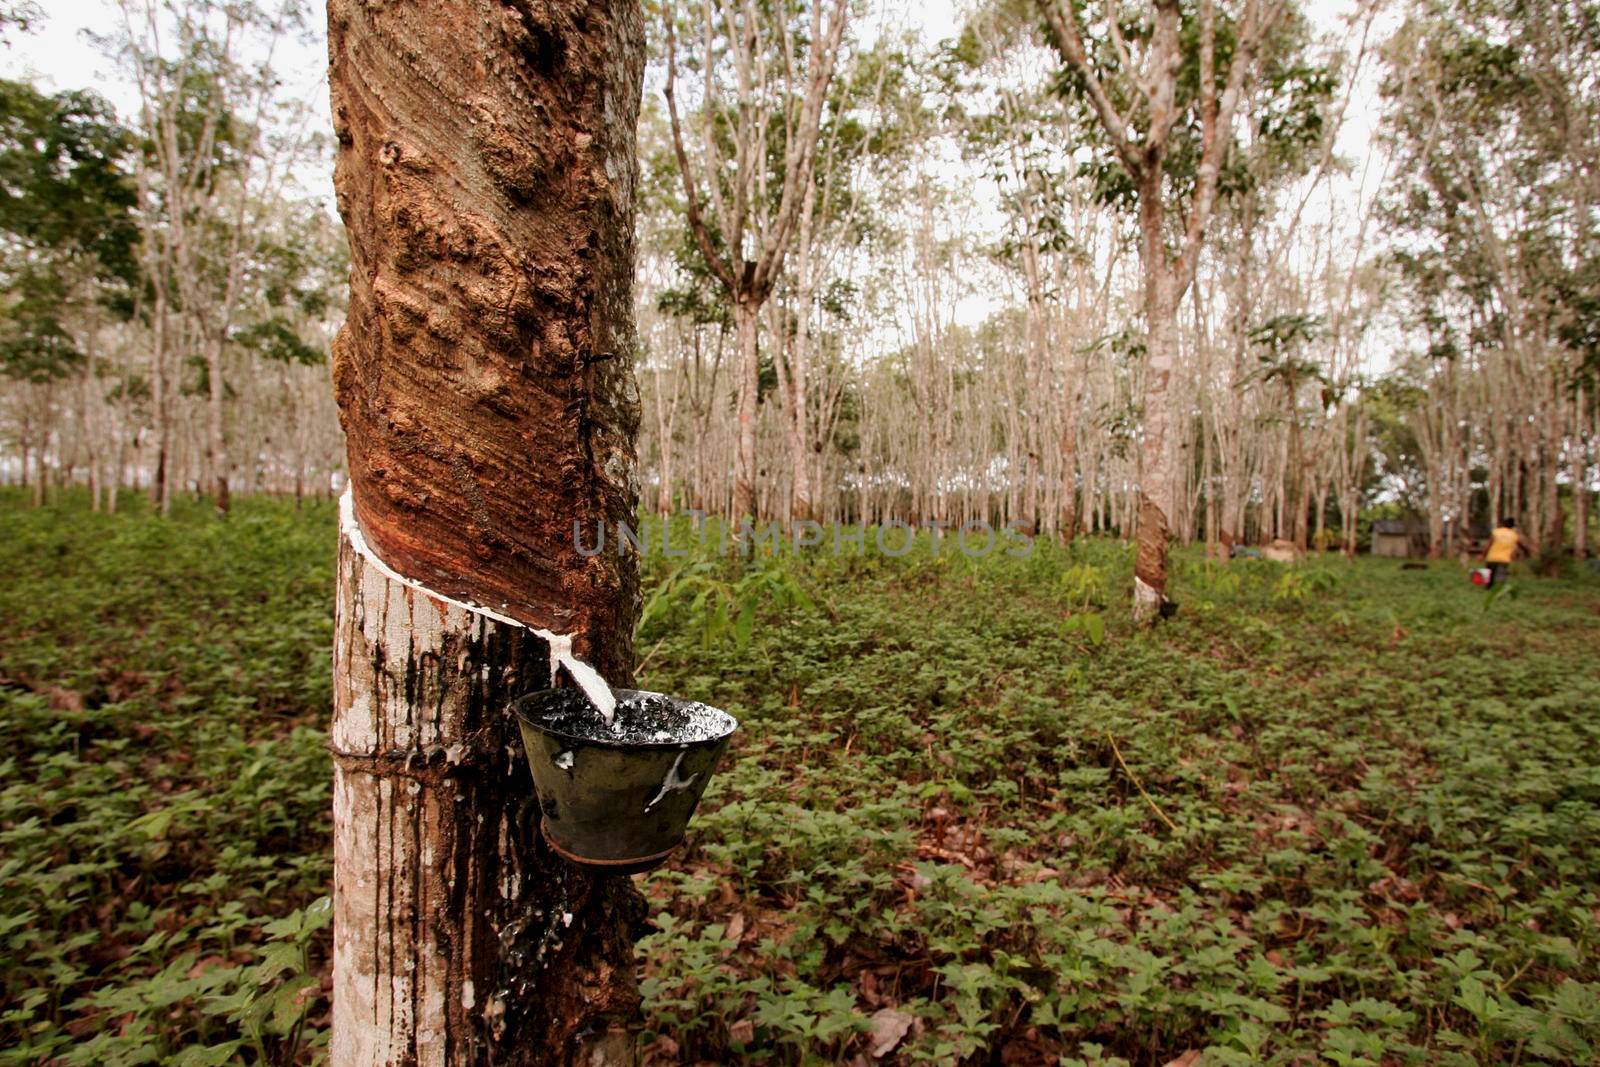 itabela, bahia / brazil - june 2, 2010: rubber plantation for latex production in the city of Itabela.